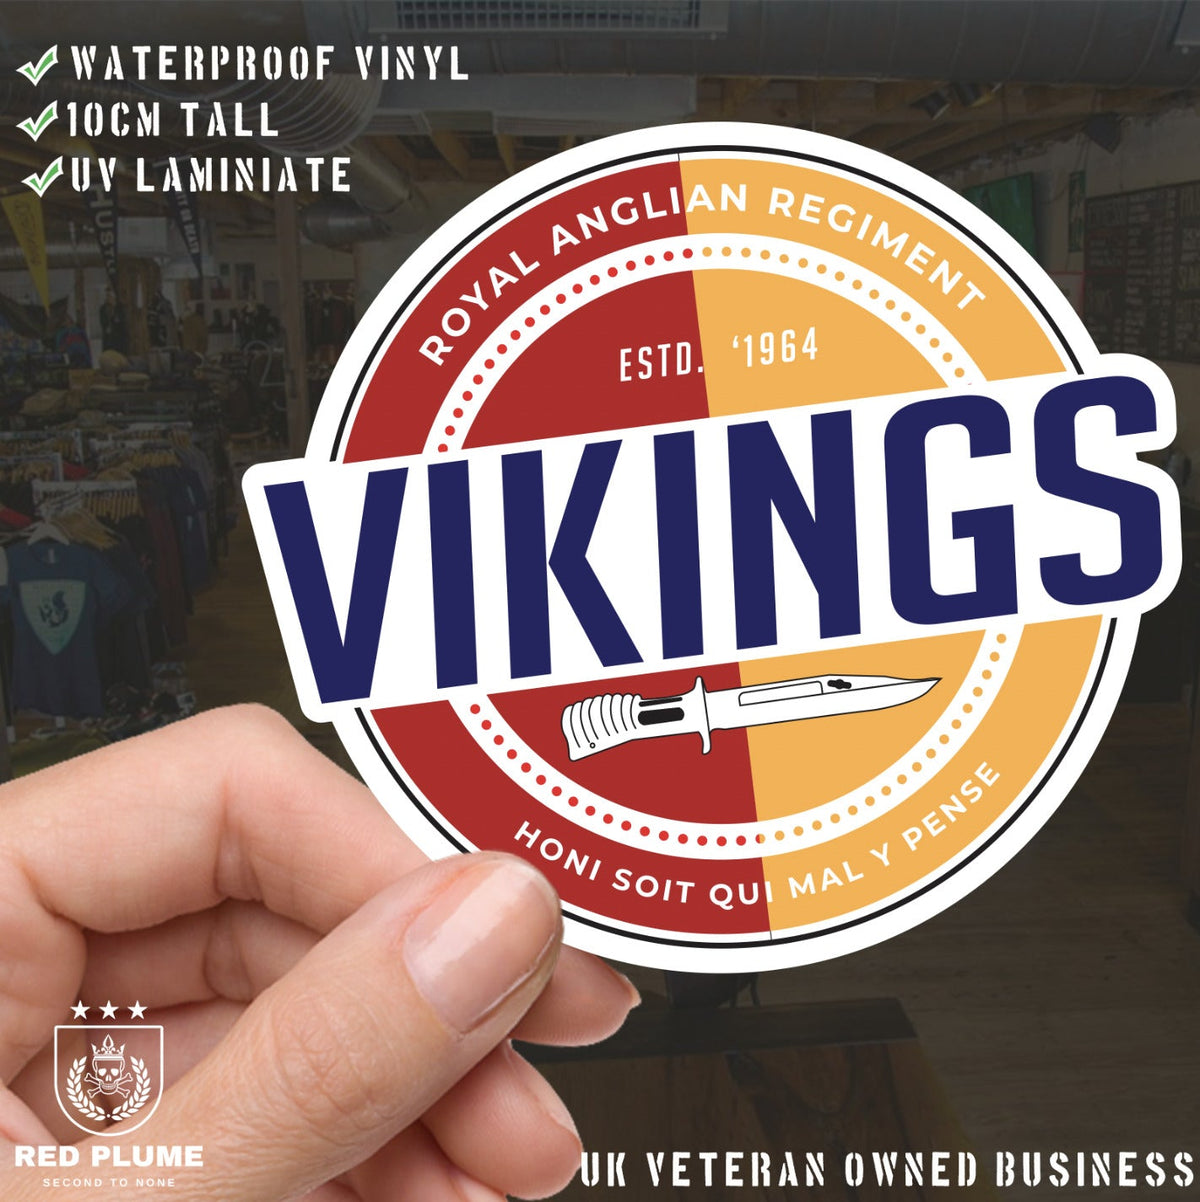 Waterproof Vinyl Decal - Royal Anglian Vikings | Retro | UV Laminated redplume